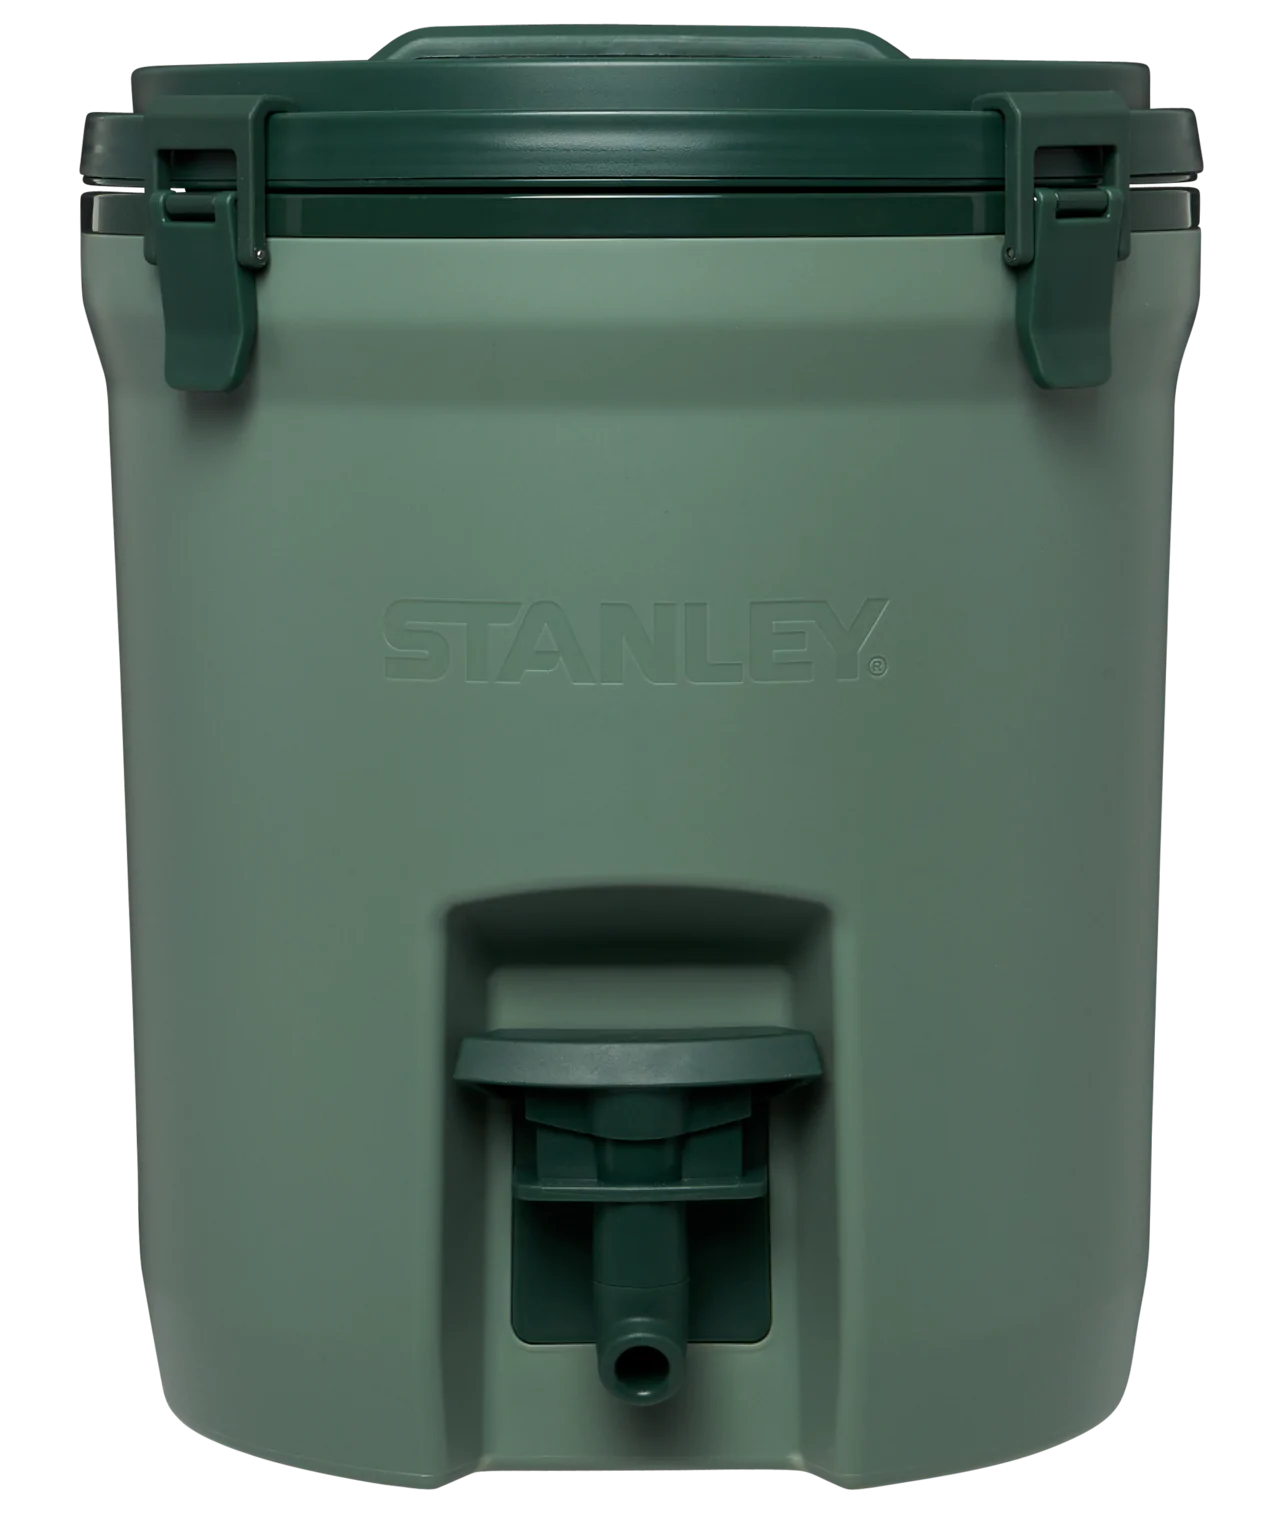 Stanley Adventure 1 Gallon Water Jug - Green